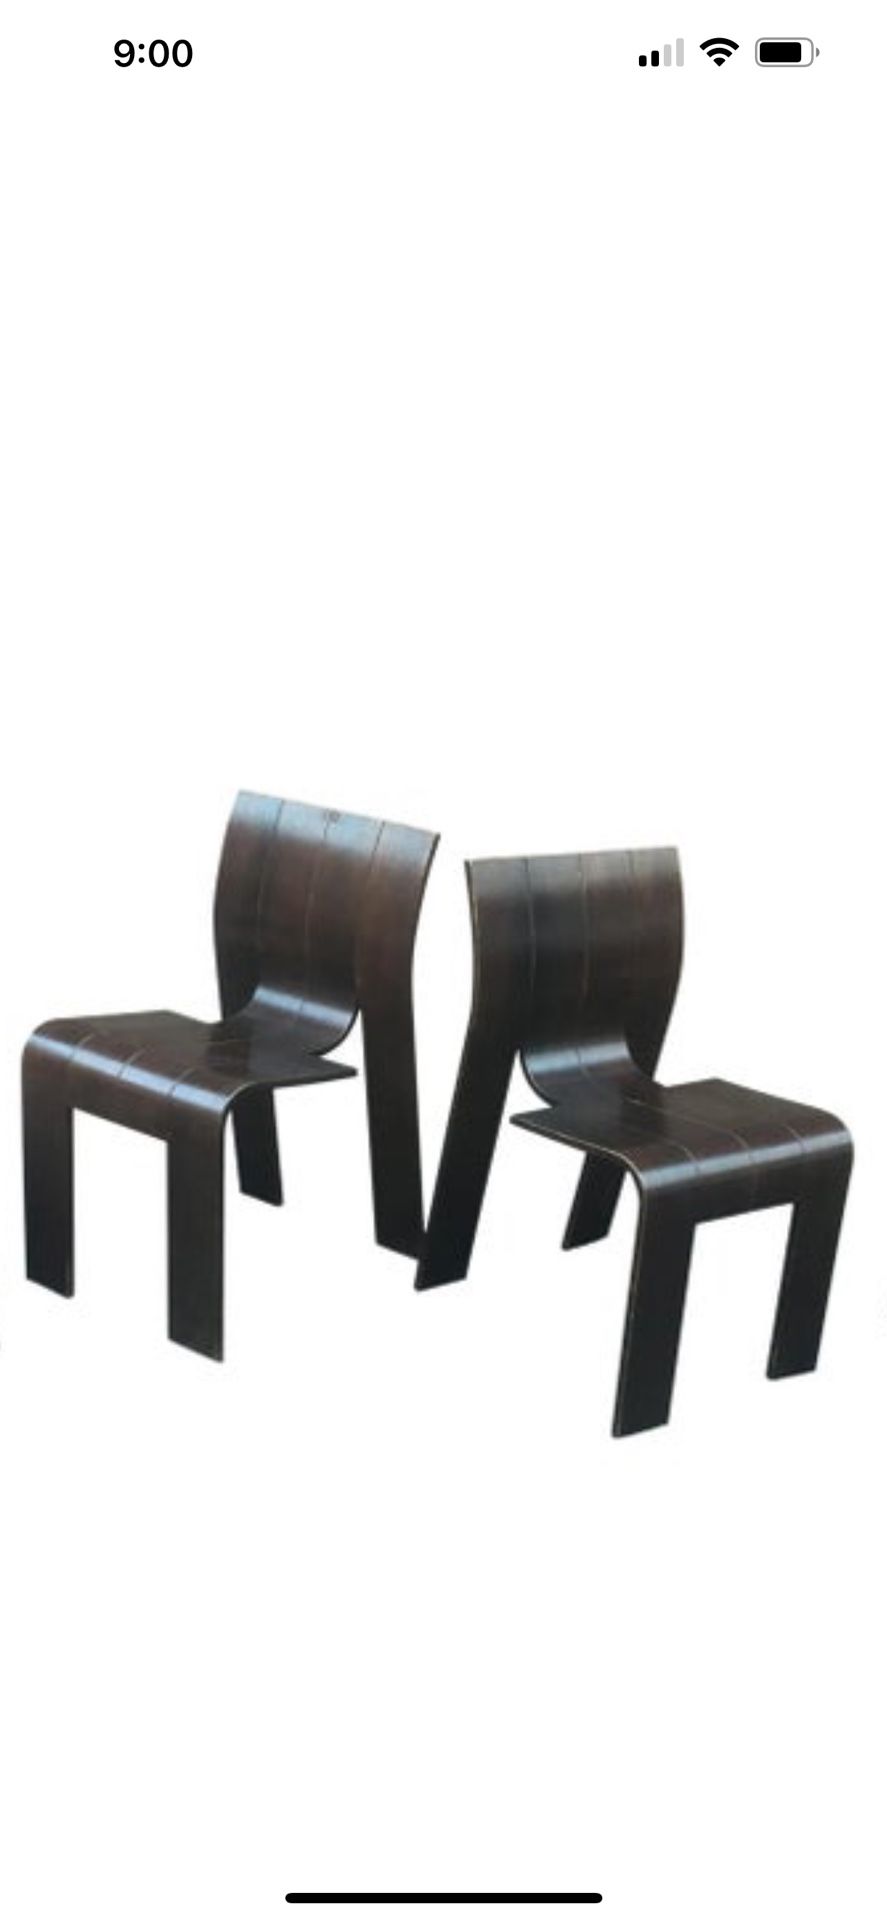 Black Strip Chairs by Gijs Bakker for Castelijn, 1974- PRICE IS FOR EACH 